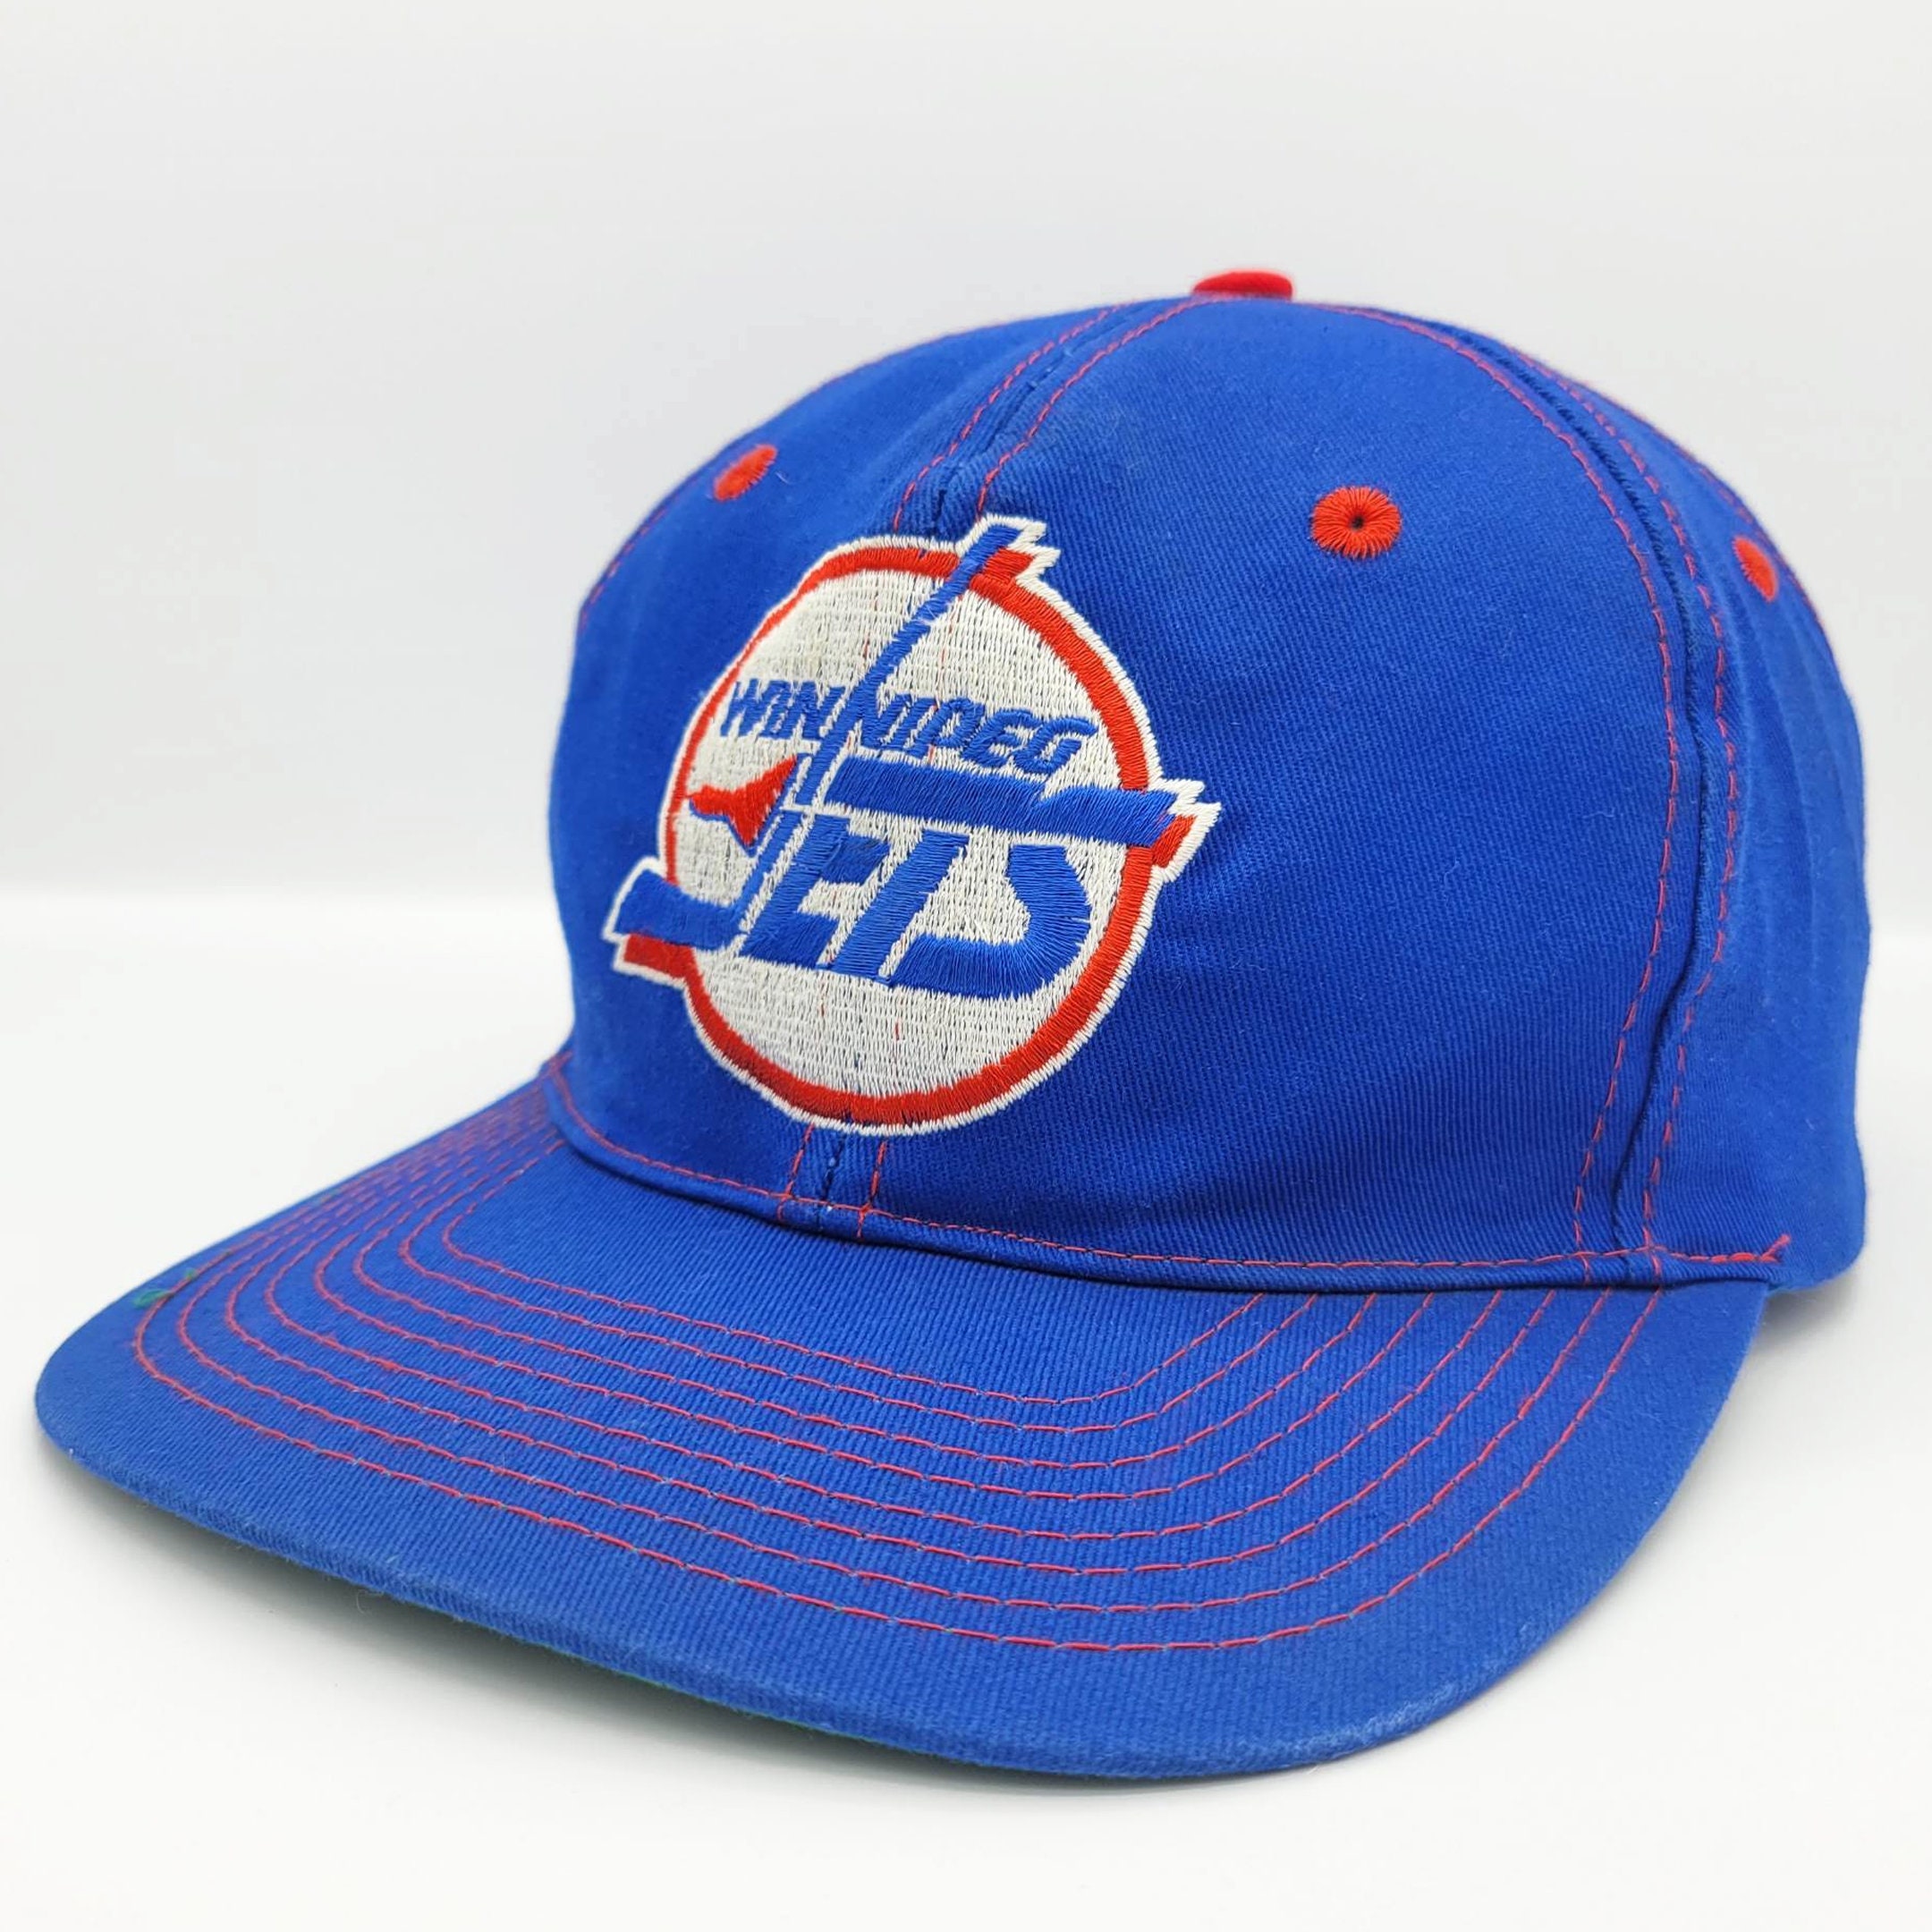 Winnipeg Jets Vintage 90s Campri Snapback Hat - Campri Teamline - NHL  Official Licensed Product - One Size Fits All - FREE SHIPPING